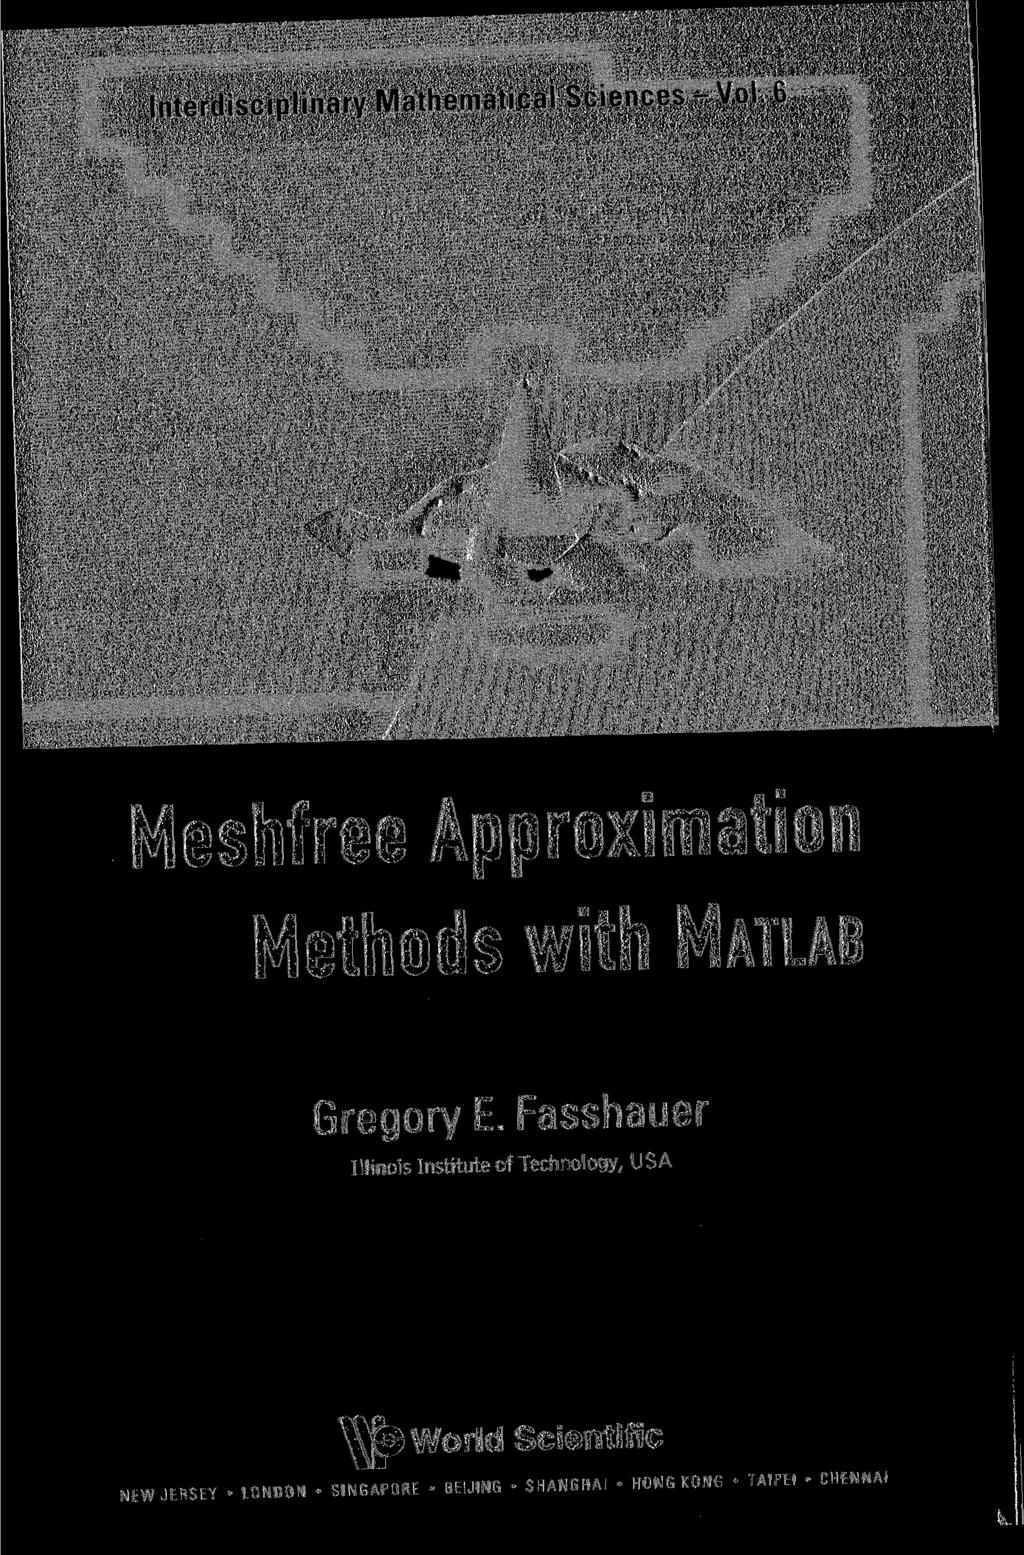 Interdisciplinary Mathematical Sc Meshfree Approximation Methods with MATLAB Gregory E.